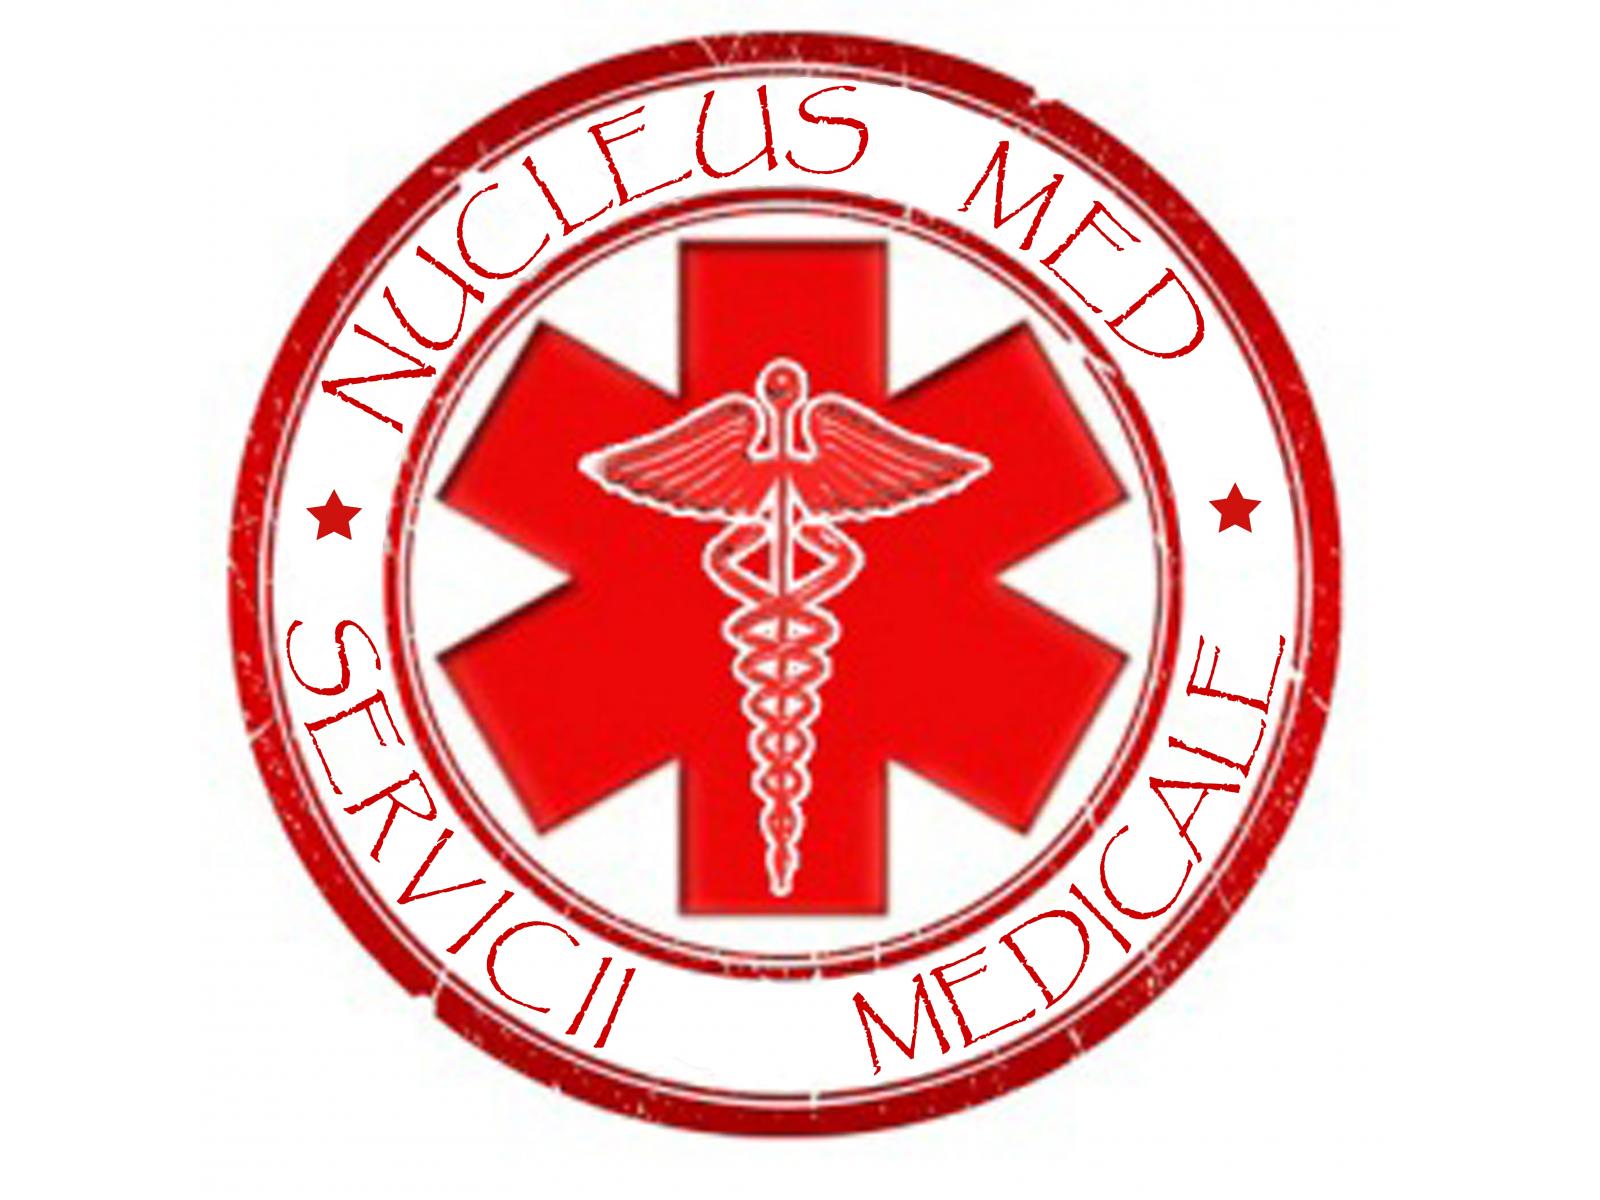 Nucleus Med Ambulanță privată Brașov - sigla_nucleus_med.jpg